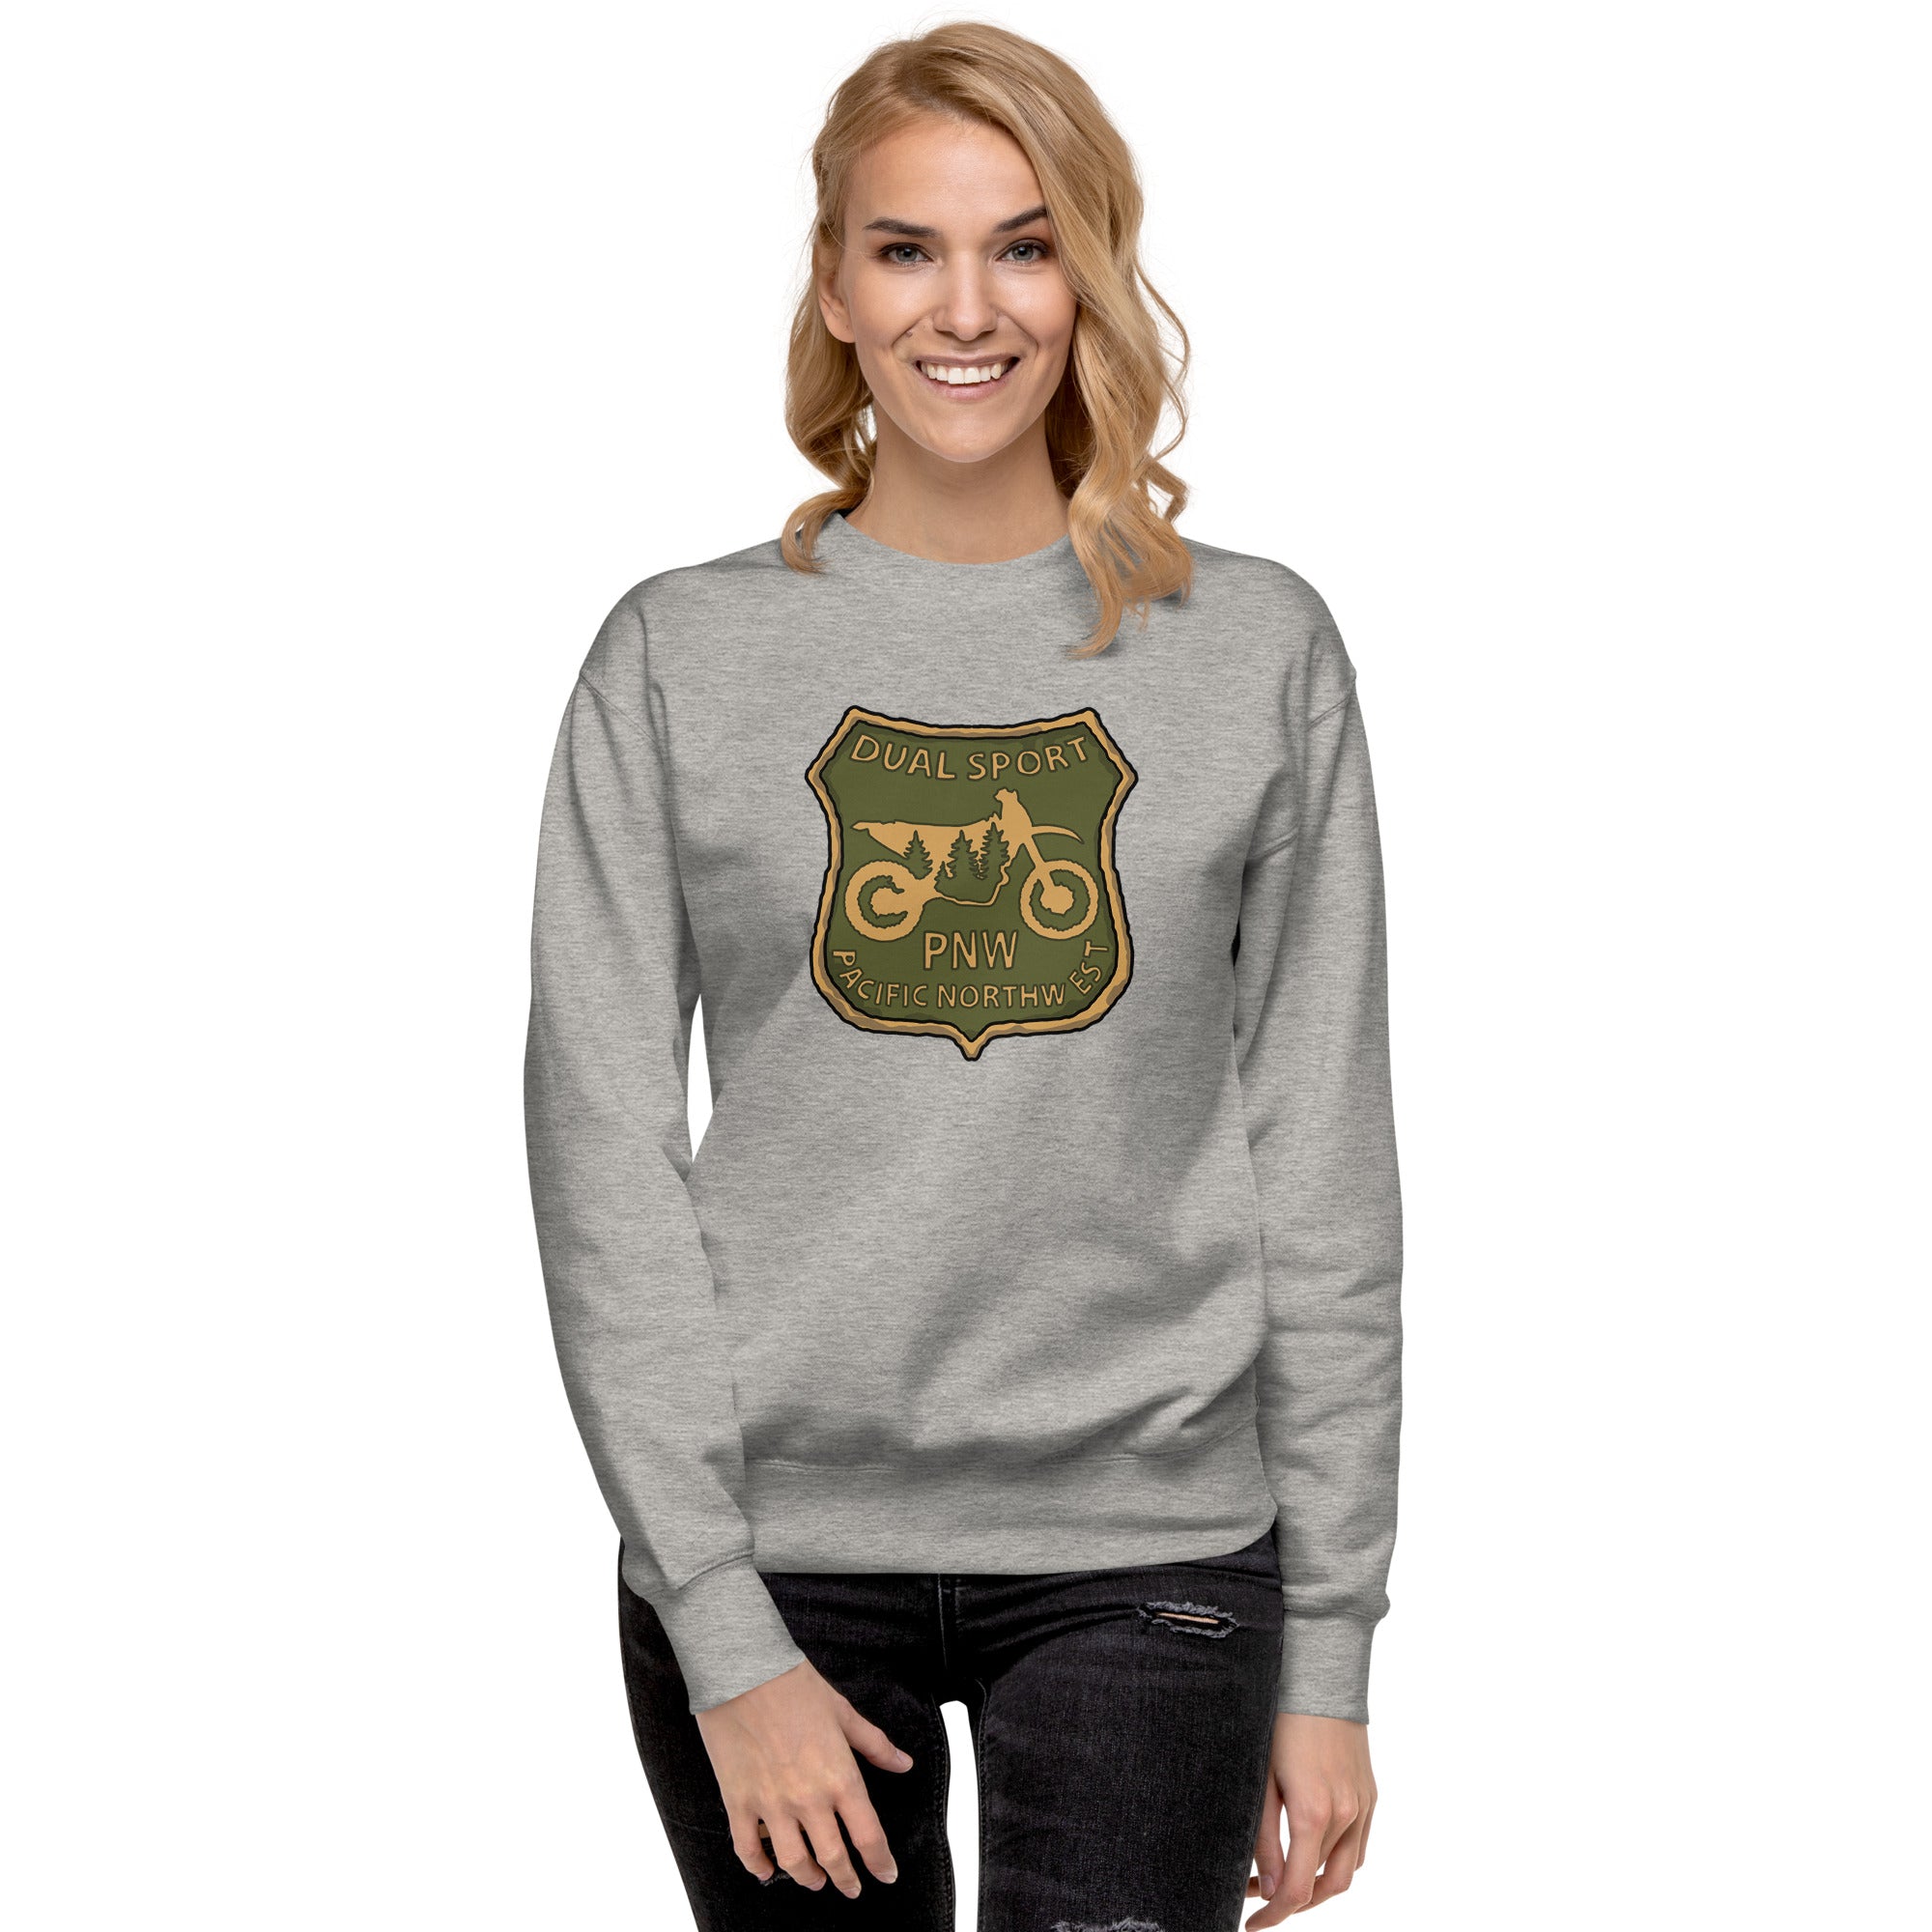 Sketchy Doodle Sweater, Premium